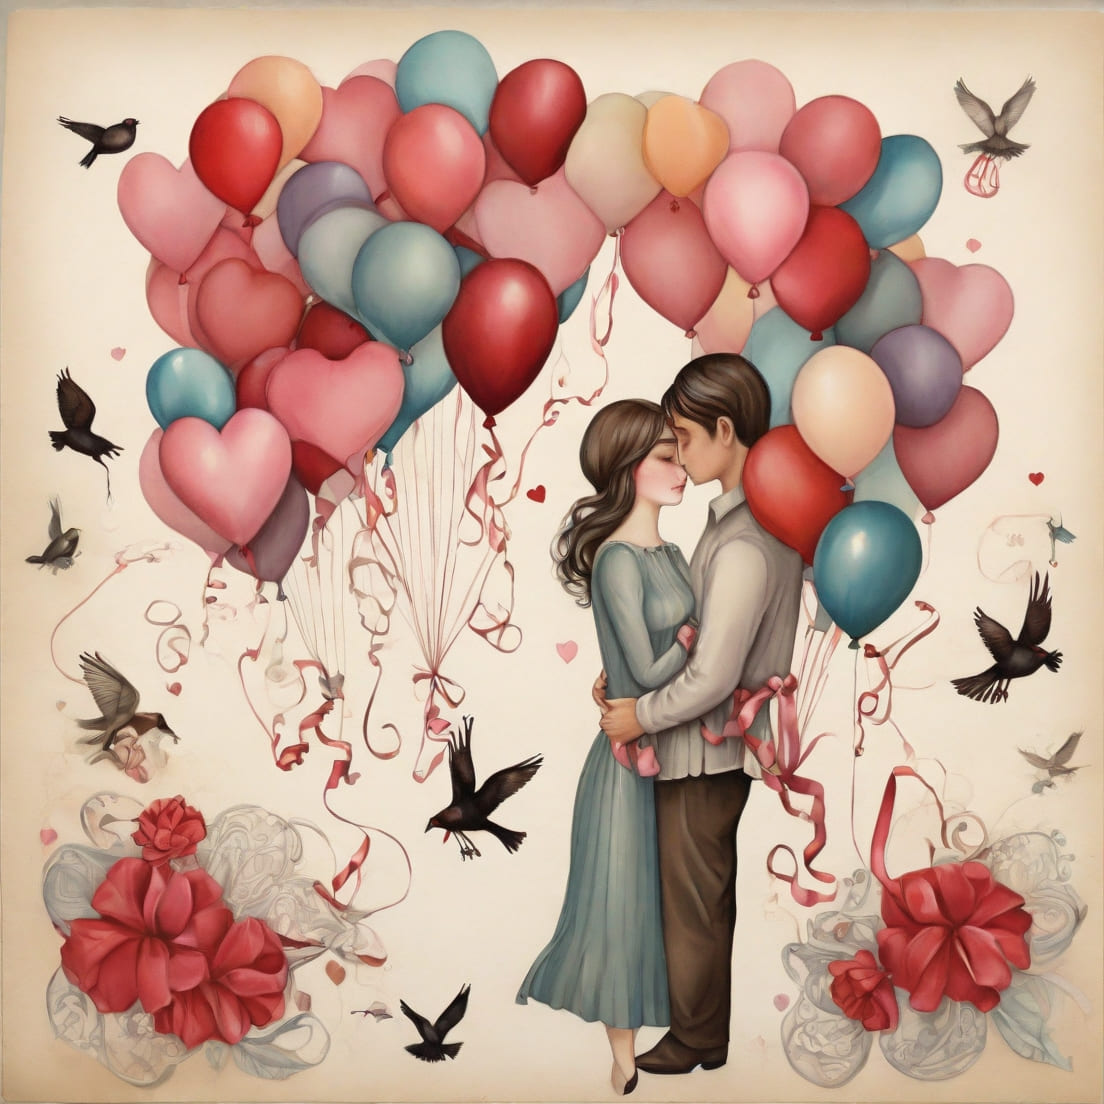 postcard, balloons, ribbons, birds, hearts, woman, man, kids preview image.